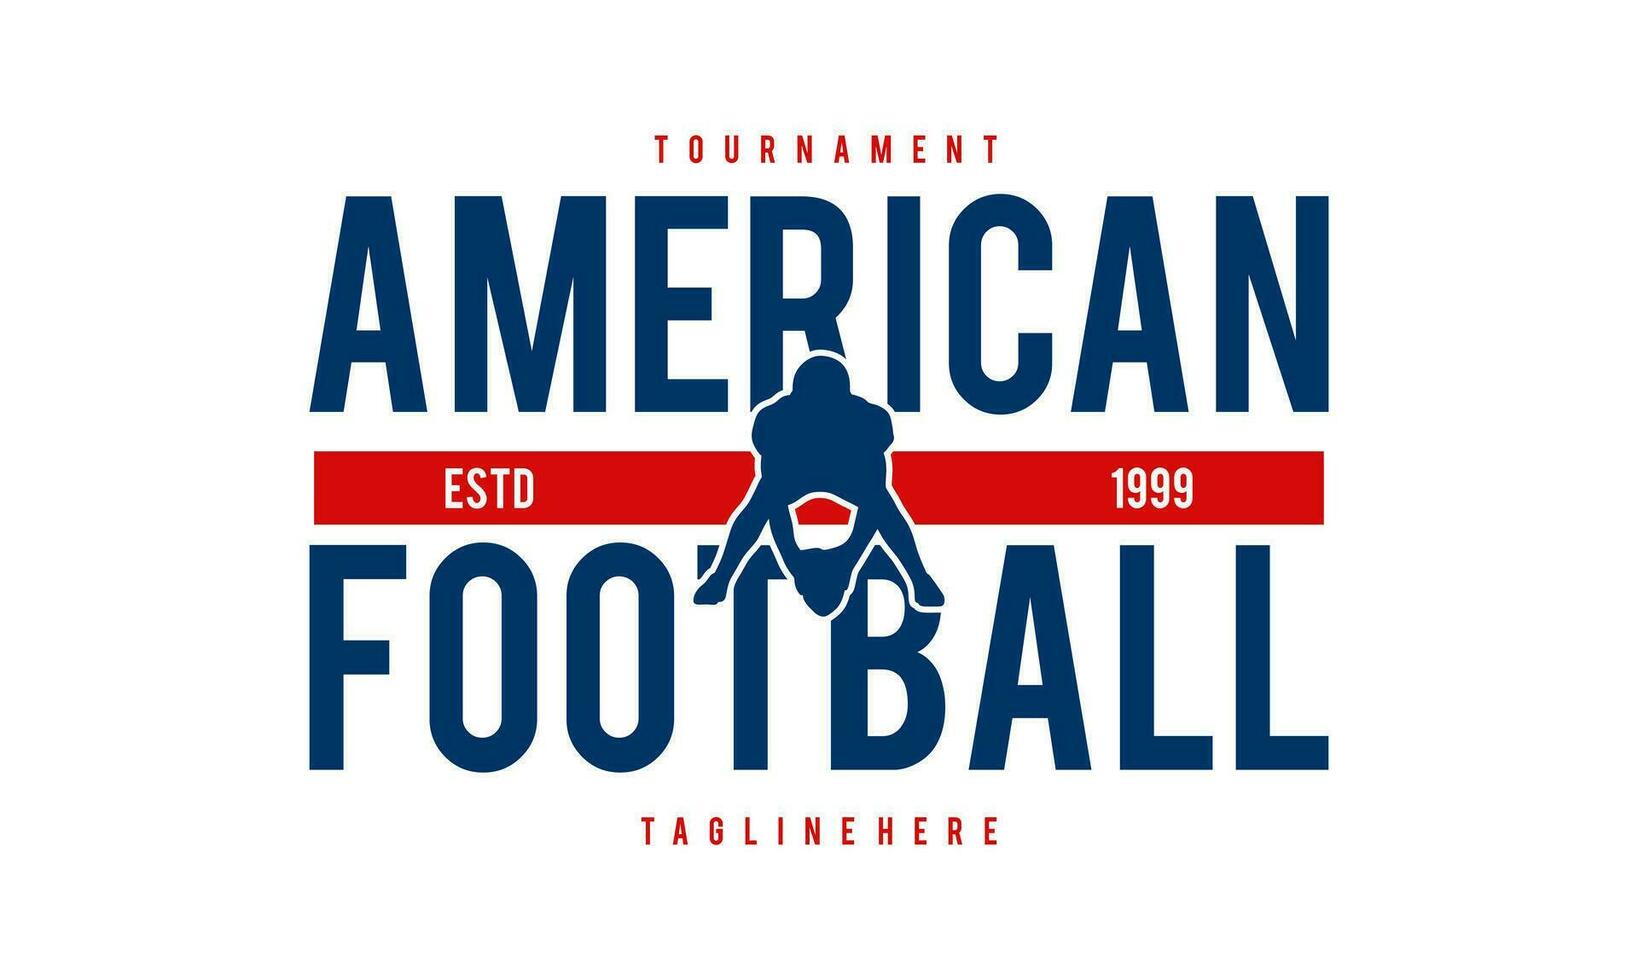 American football player silhouette logo  American Football tournament logo vector